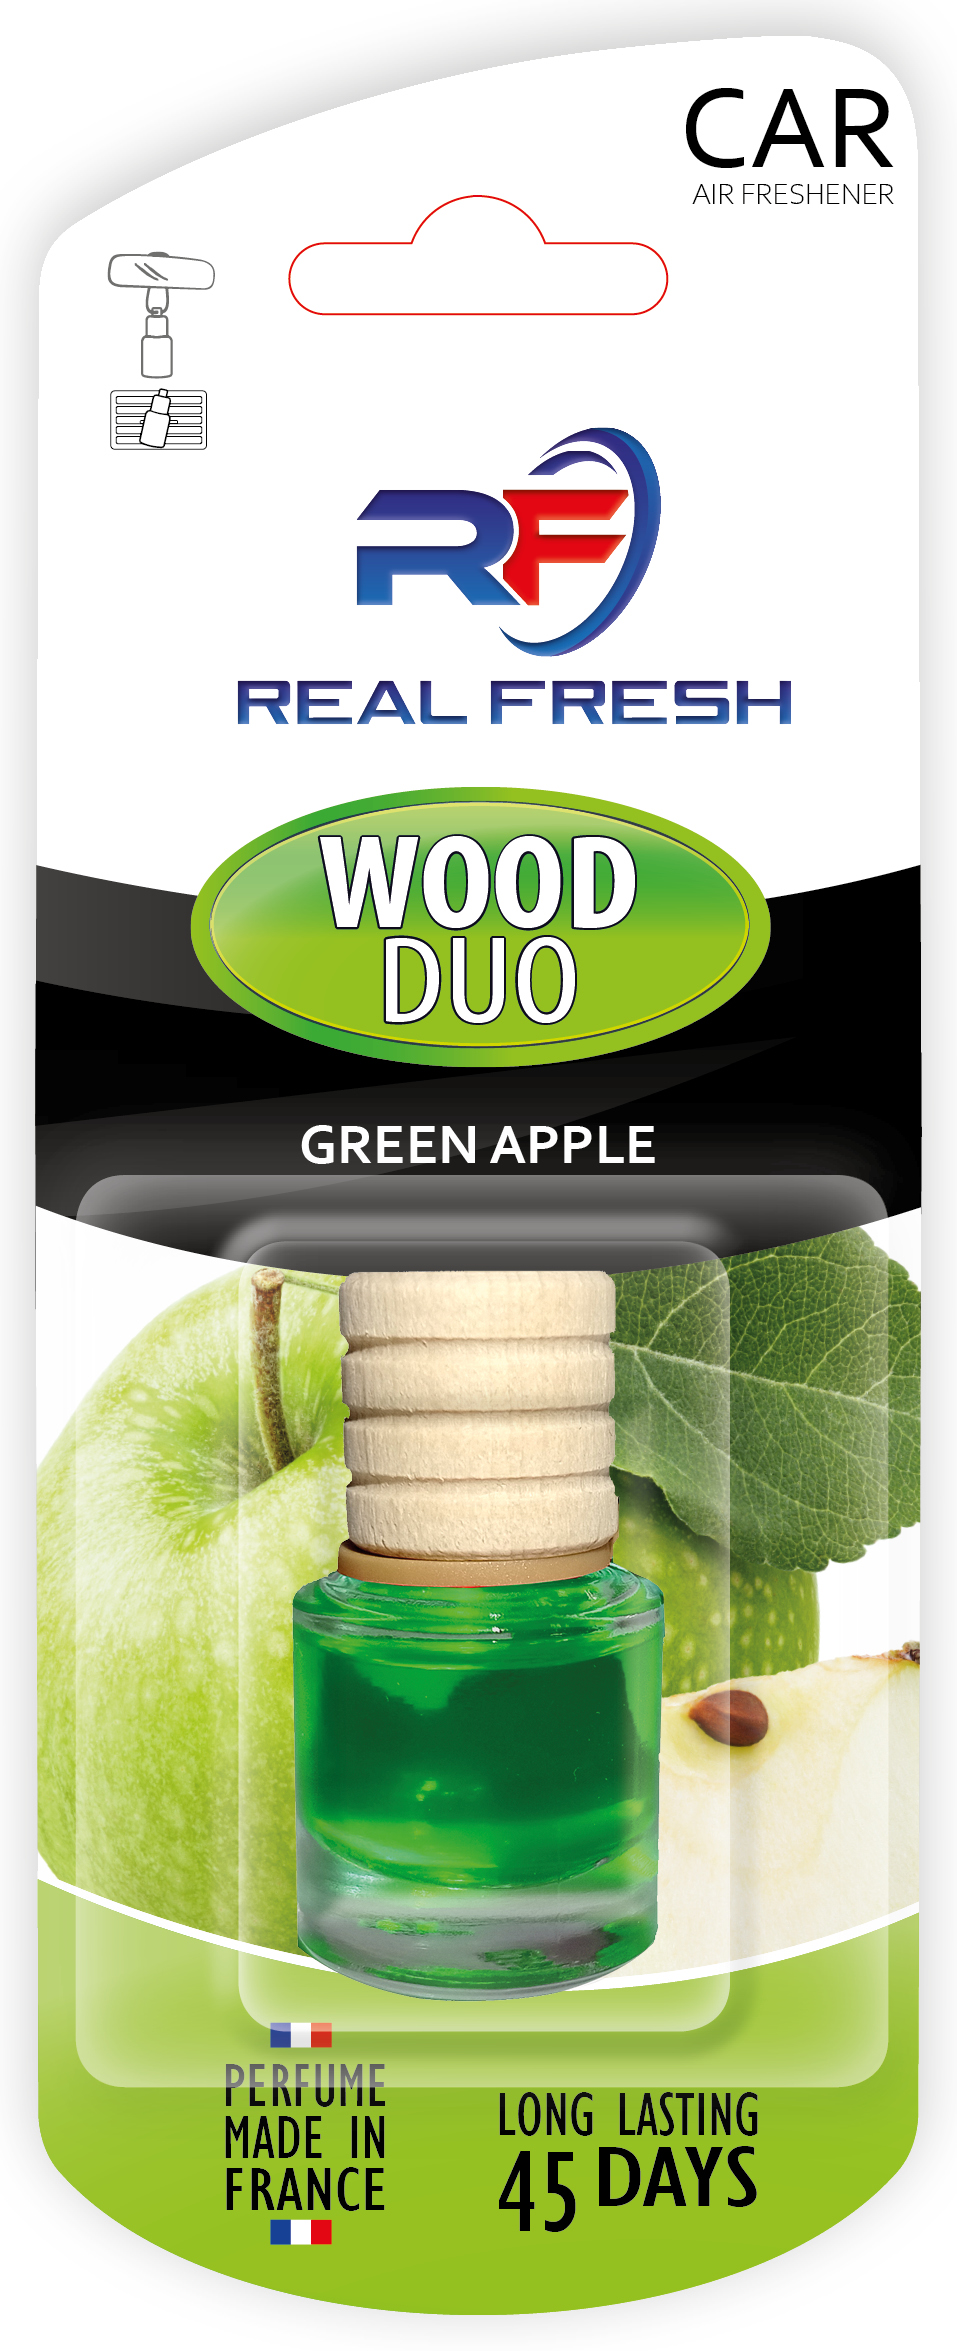 WOOD DUO Green Apple Image